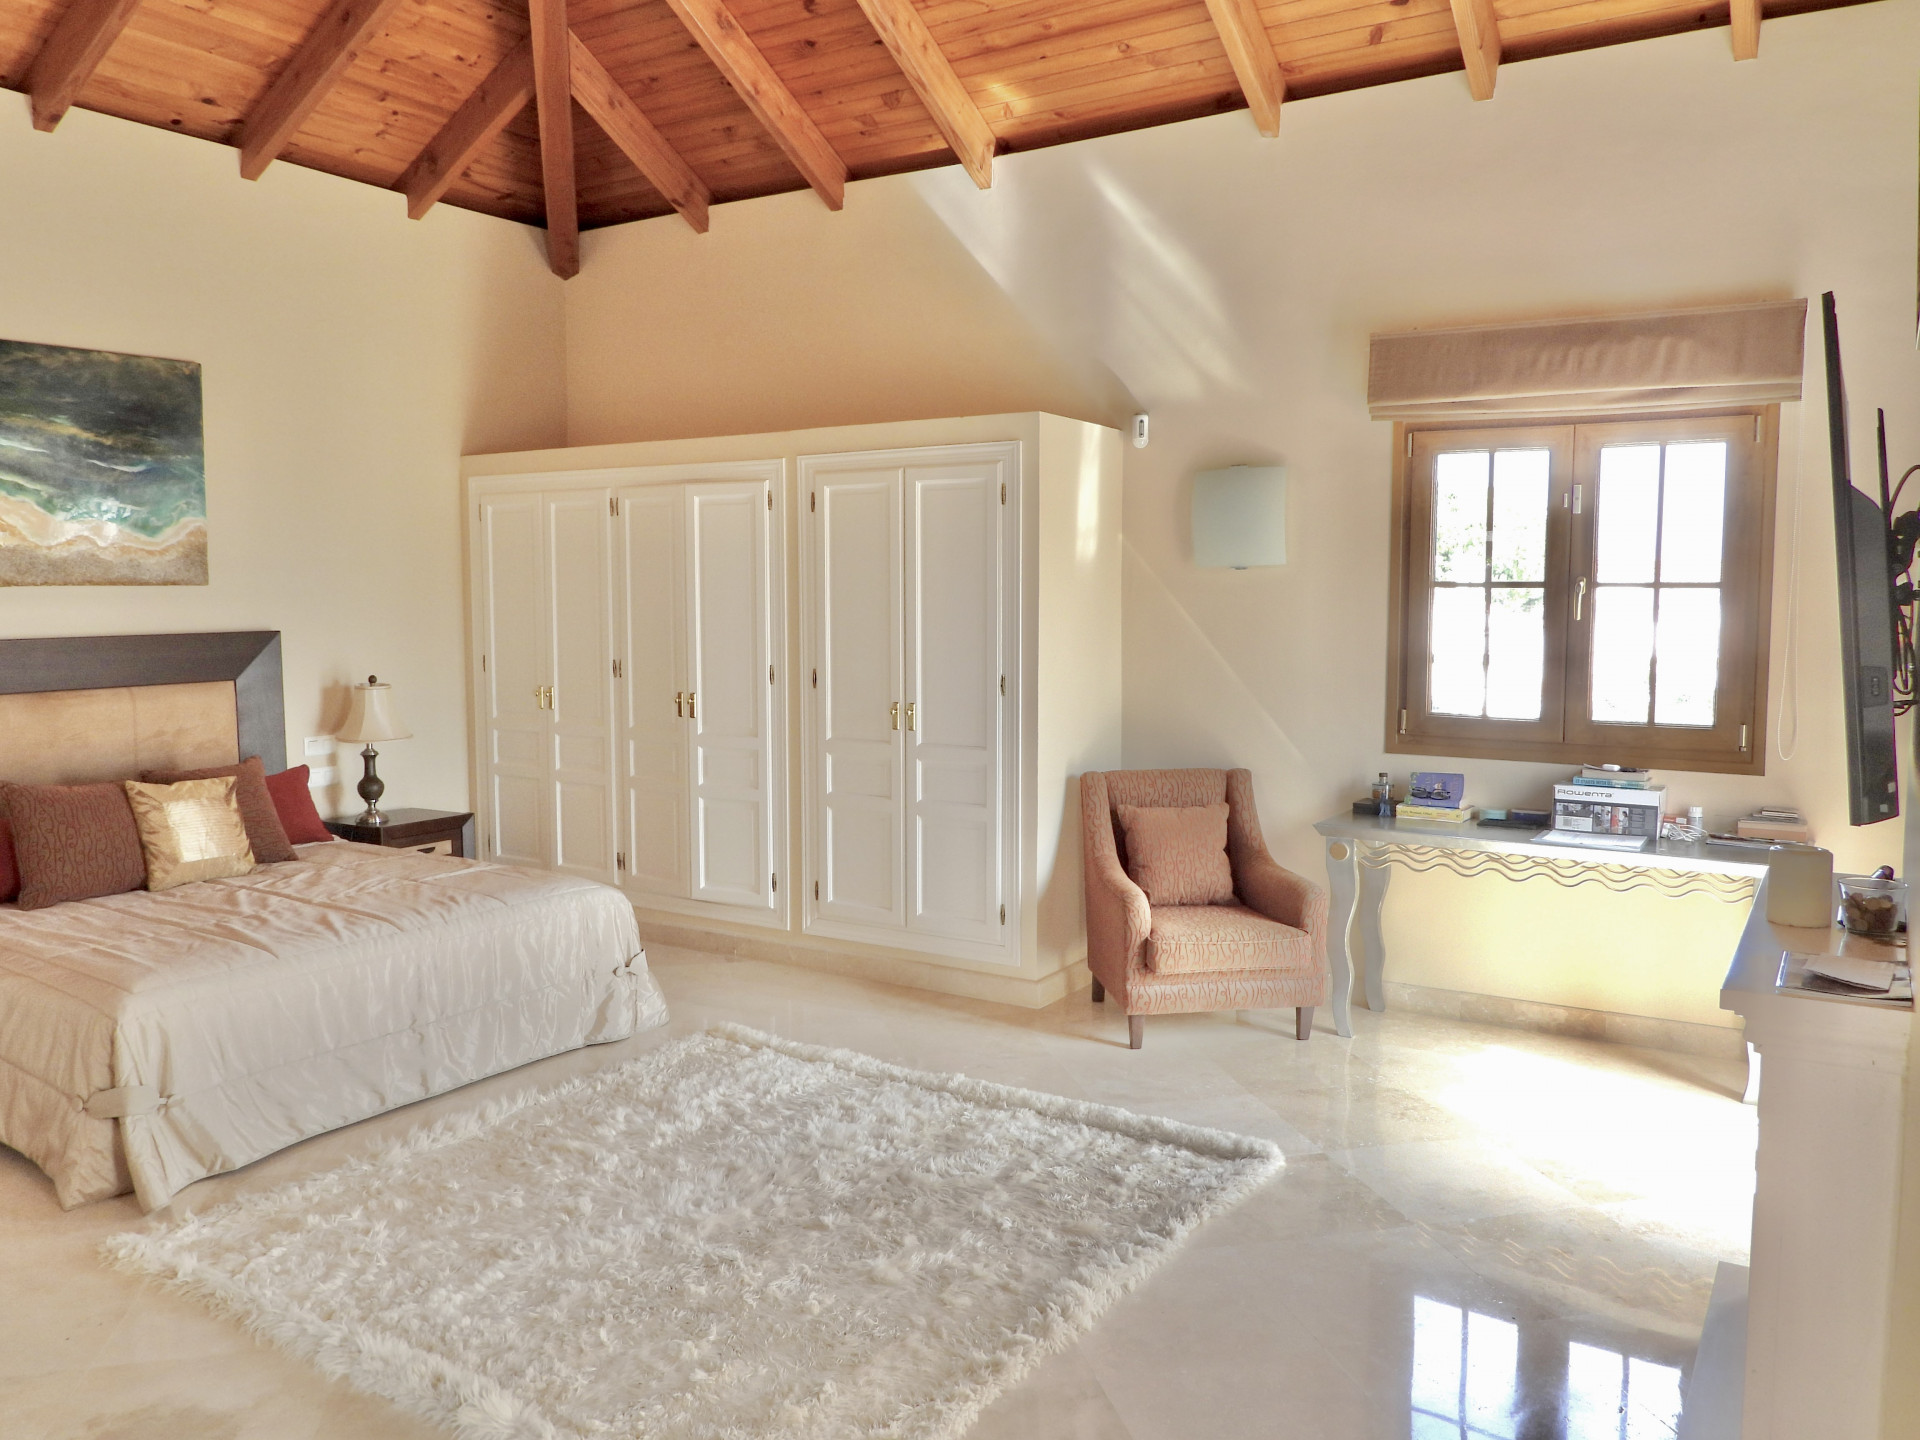 Stunning luxury villa is located in the prestigious area of El Paraiso